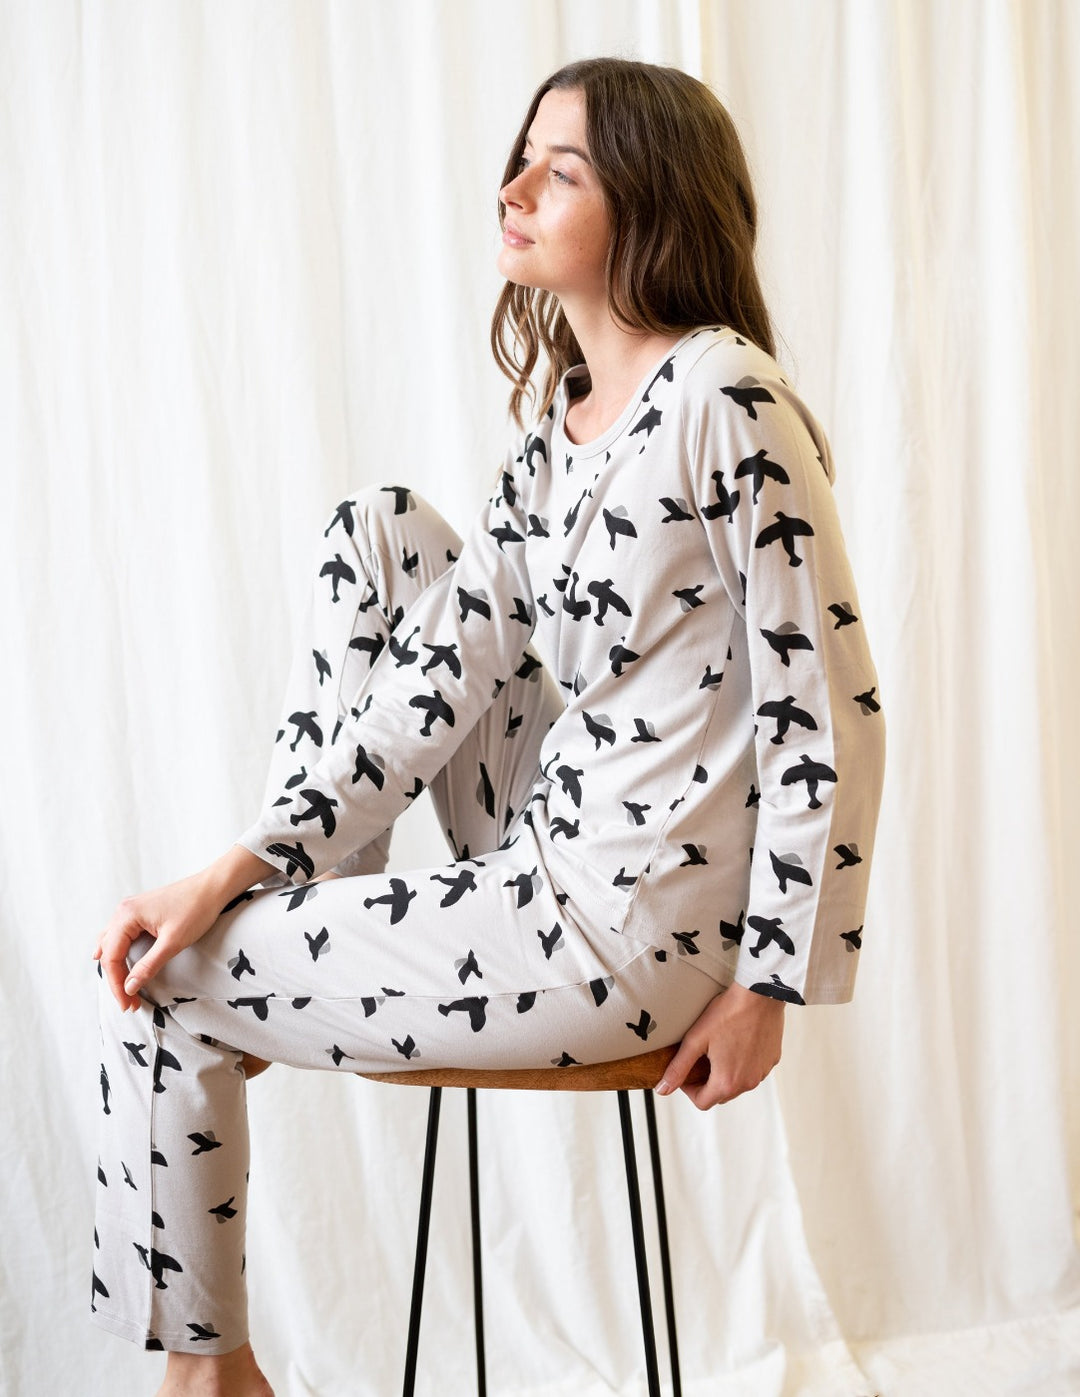 Just Love Solid Satin Pajama Short Set for Women Sleepwear PJs (Black /  Ivory, Small) 